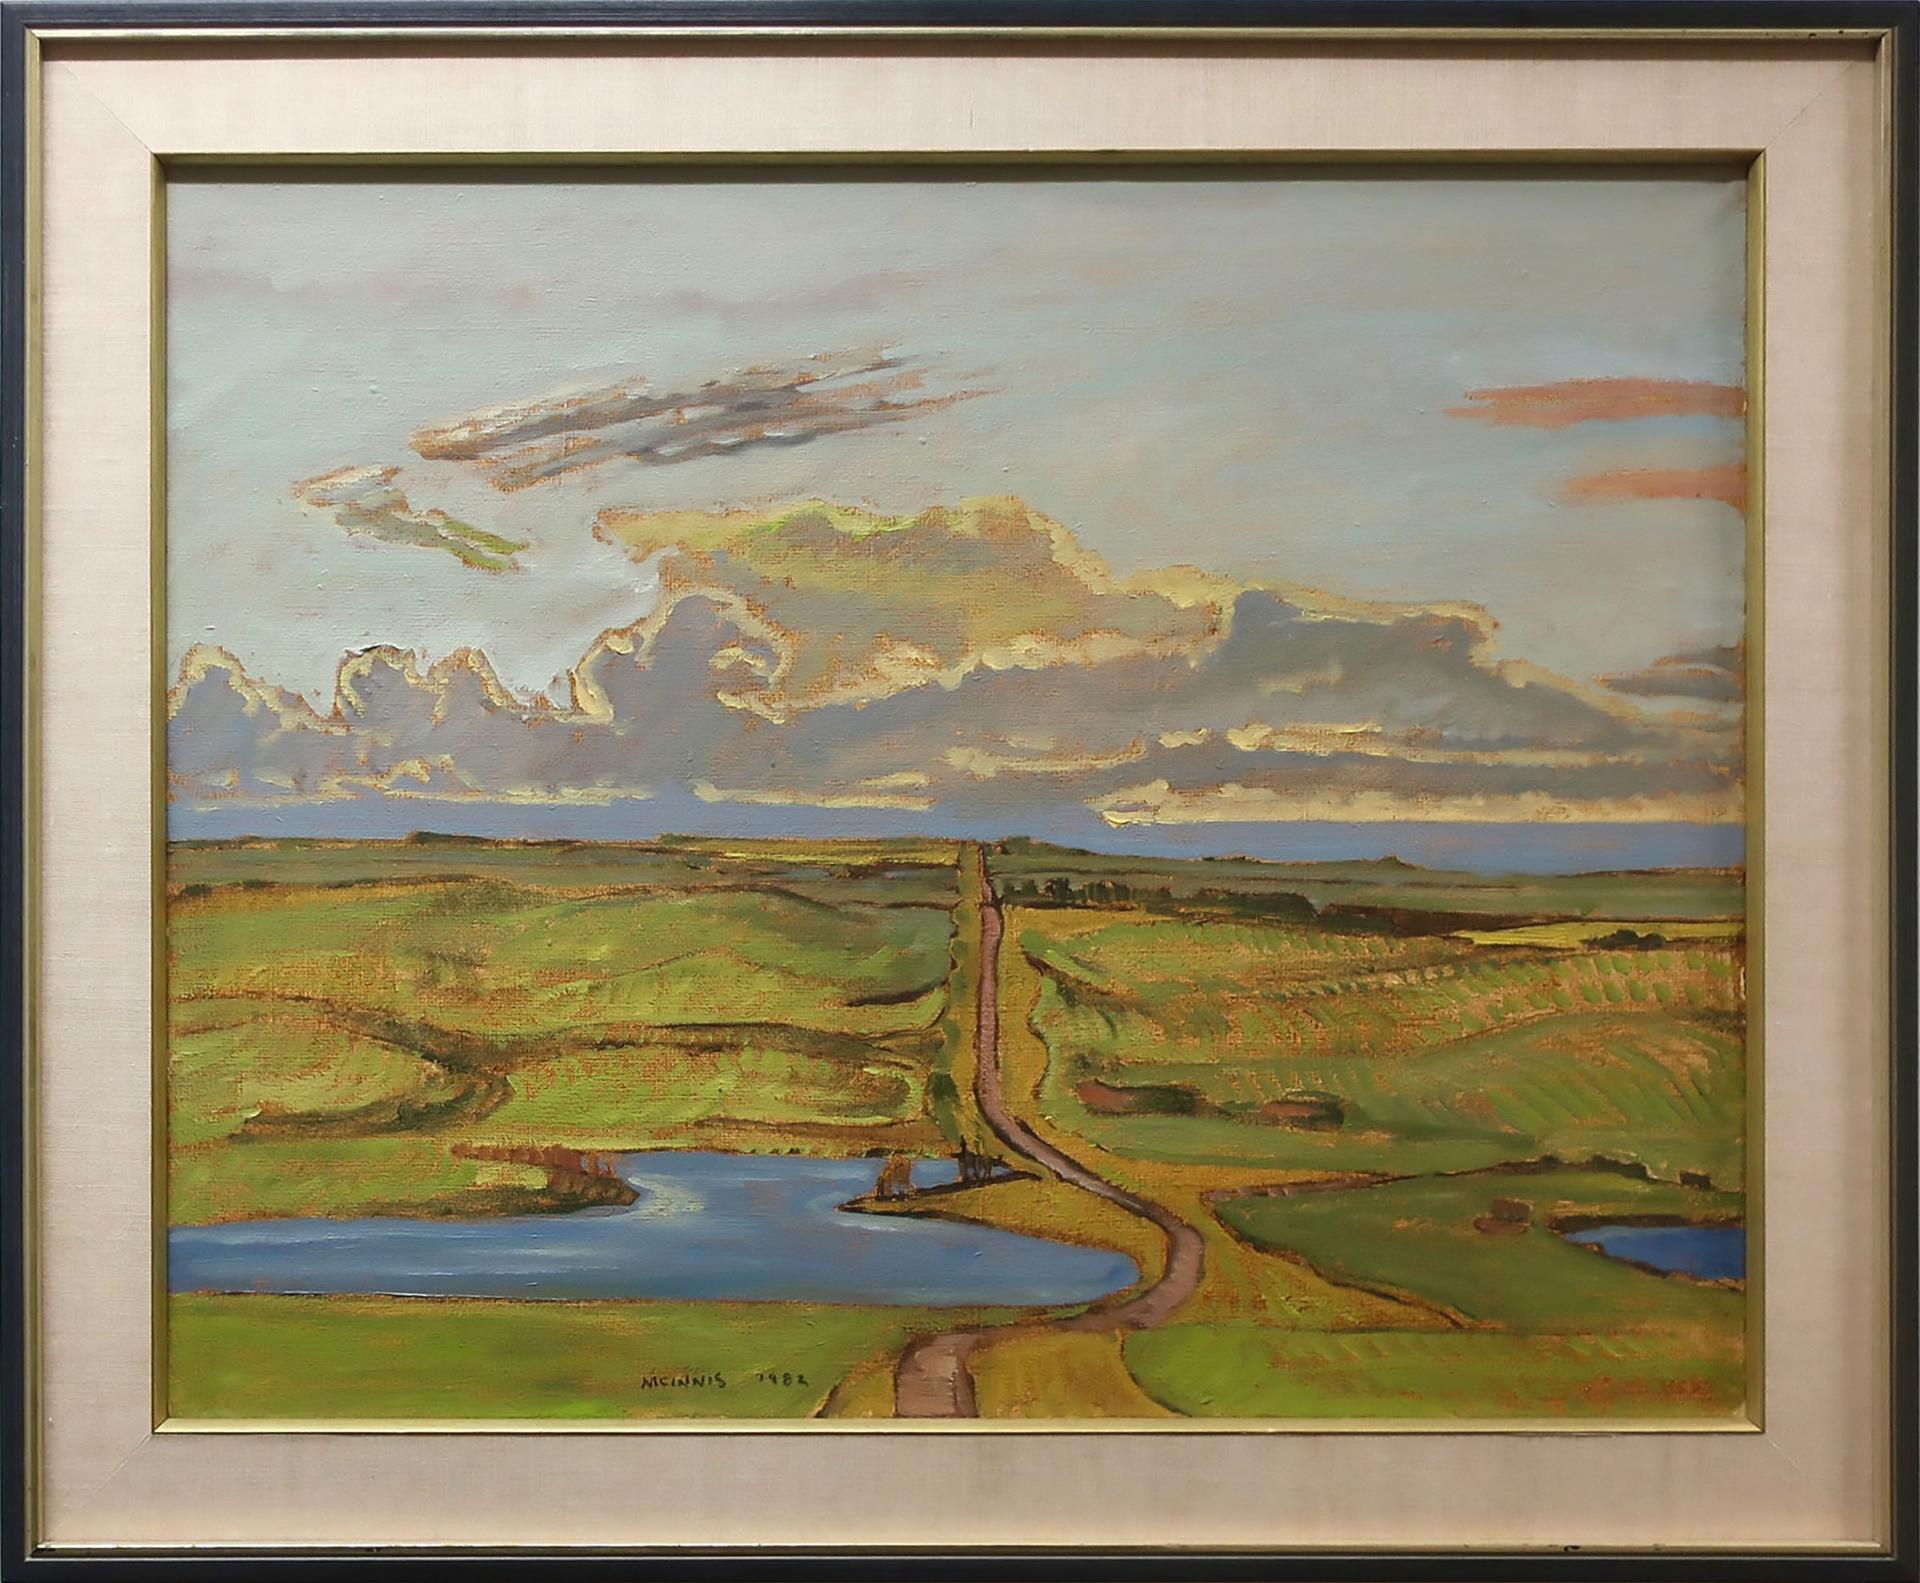 Robert F.M. McInnis (1942) - Indus, Alberta - August Field